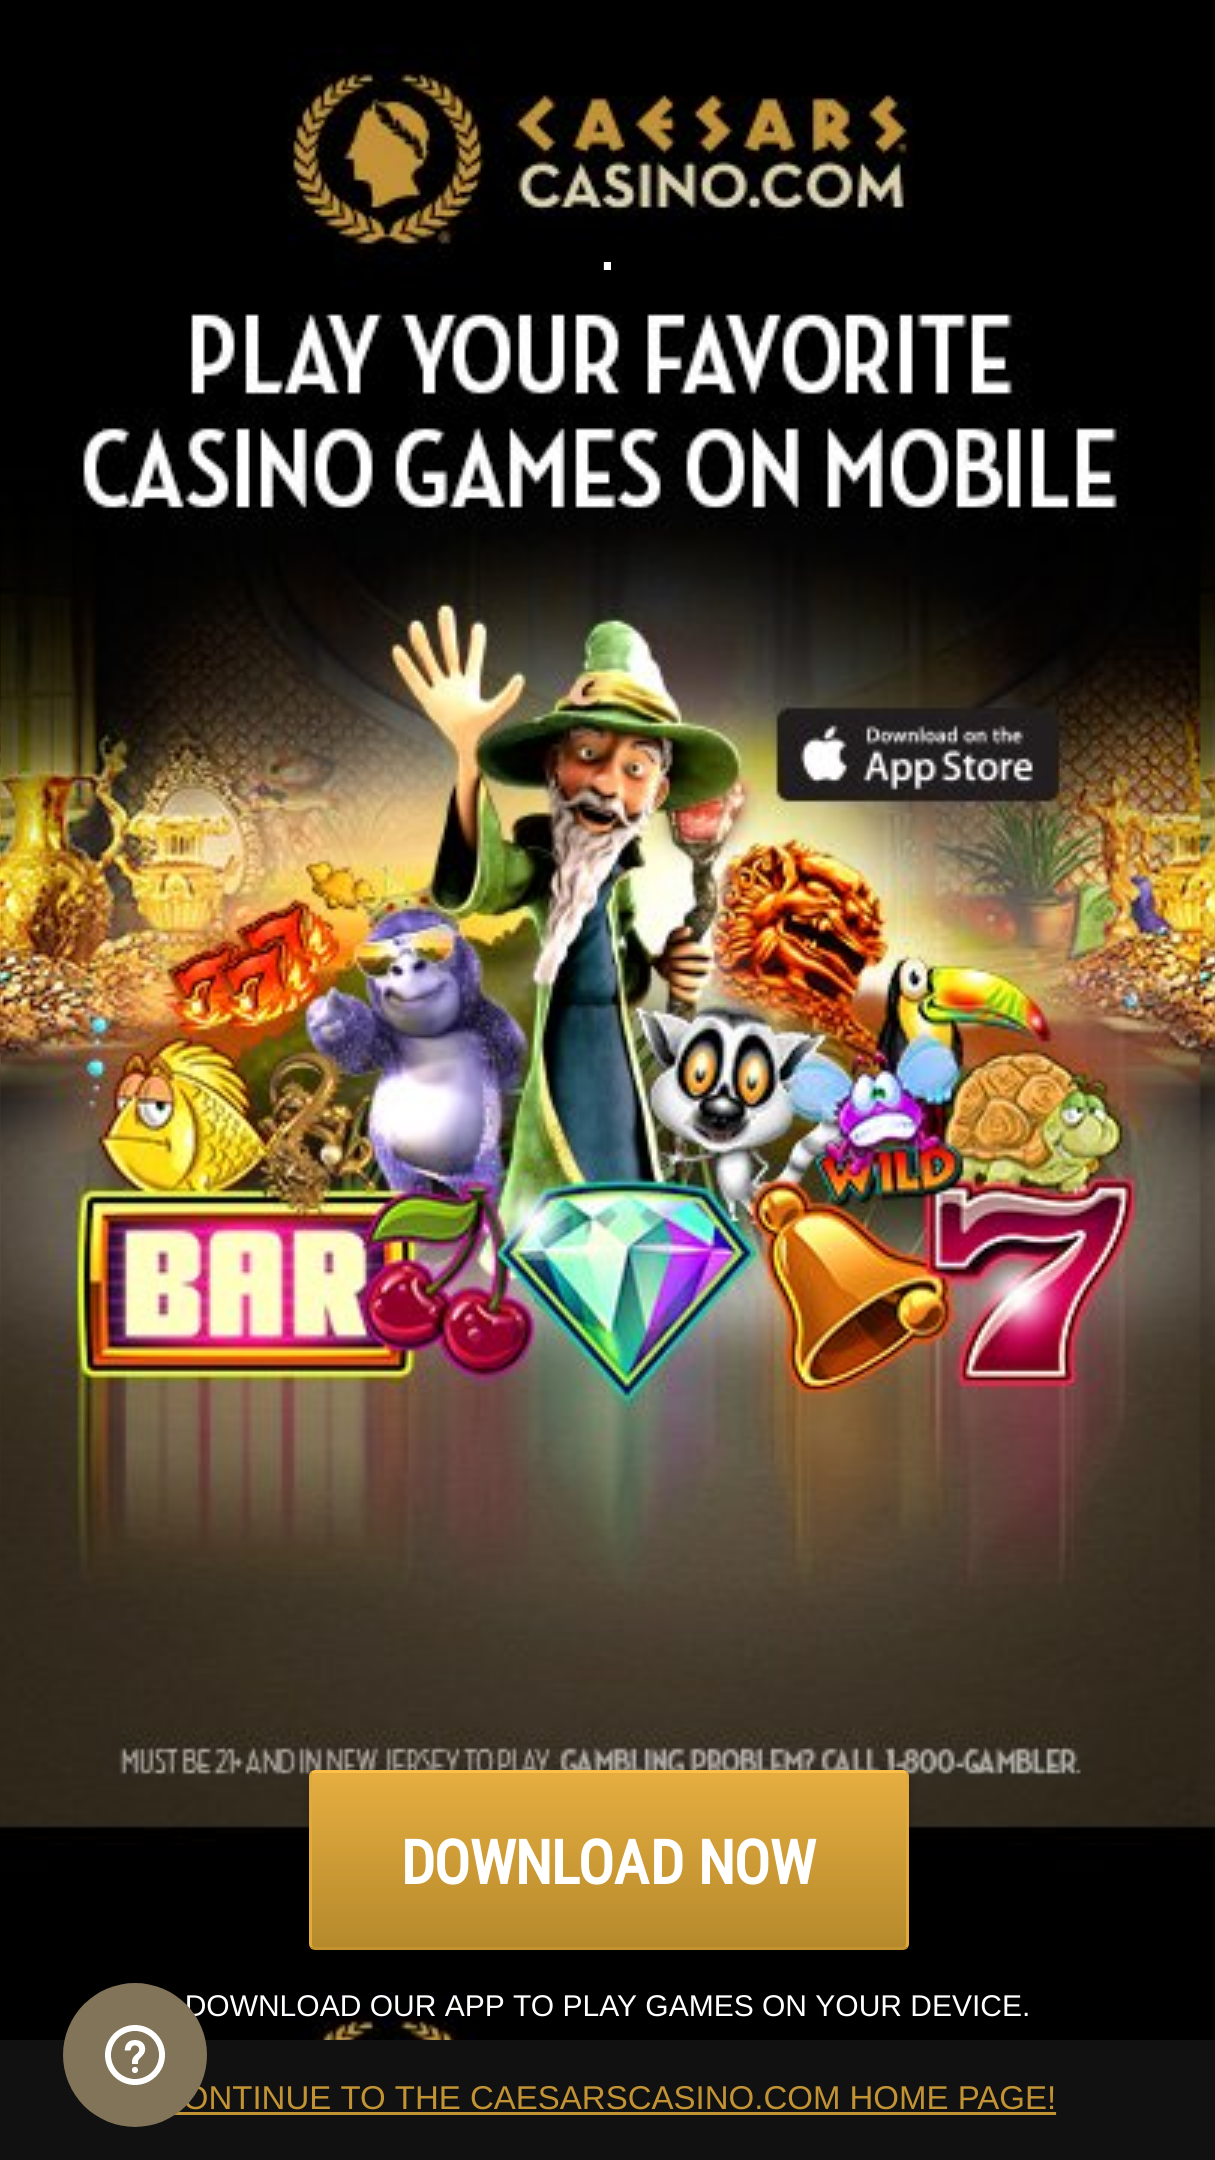 parx casino sports betting app